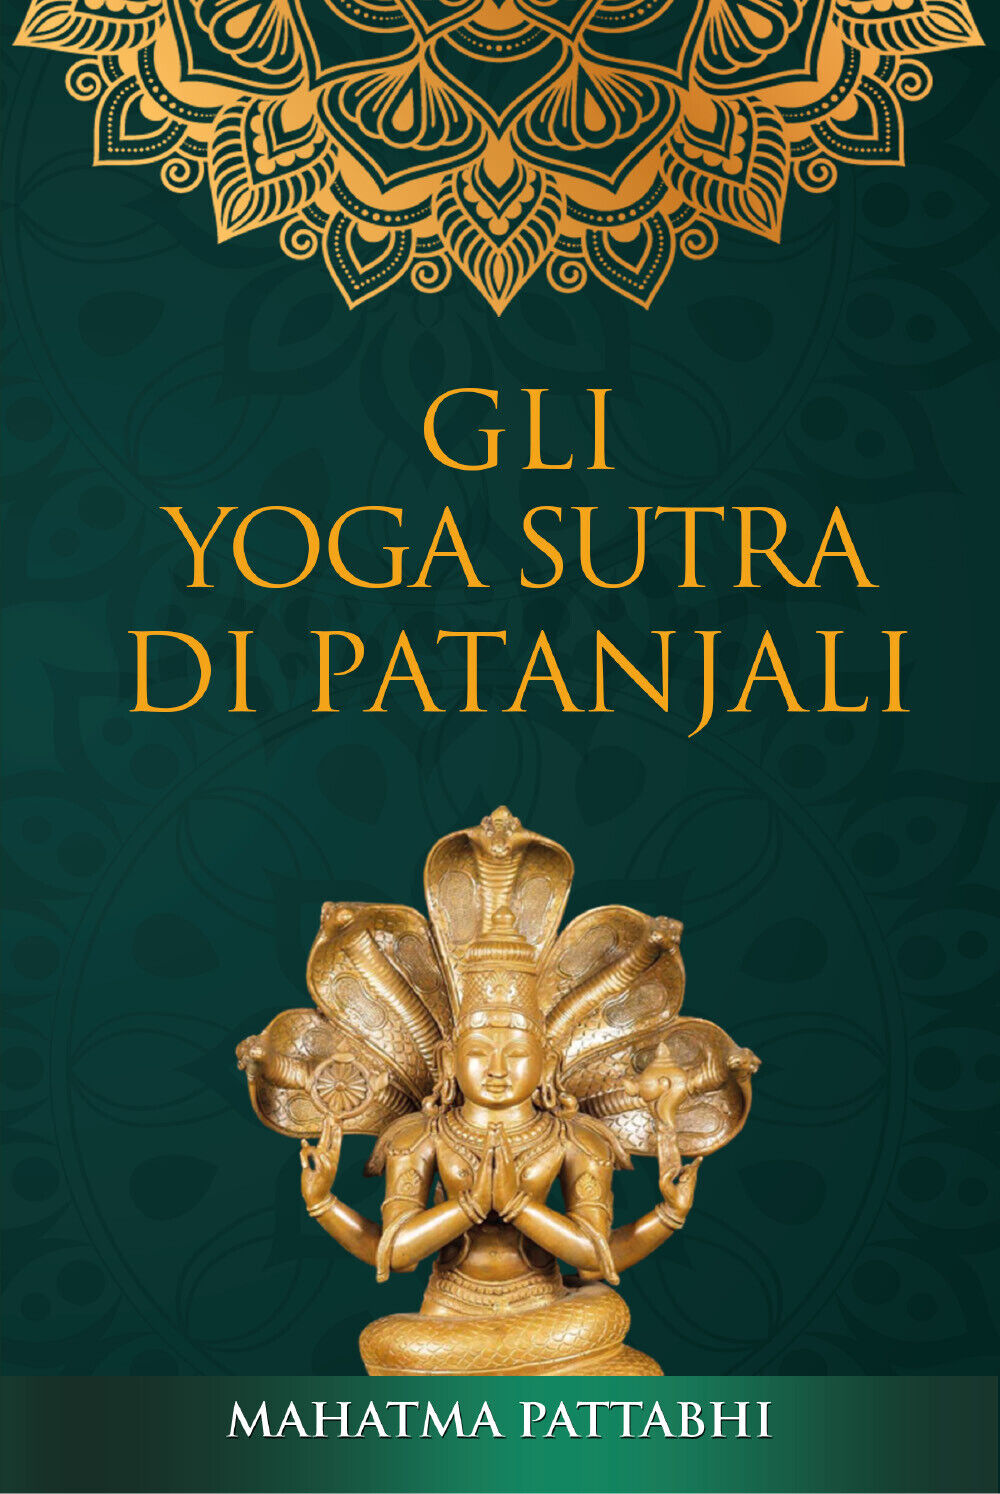 Gli yoga sutra di Patanjali  di Mahatma Pattabhi,  2021,  Youcanprint